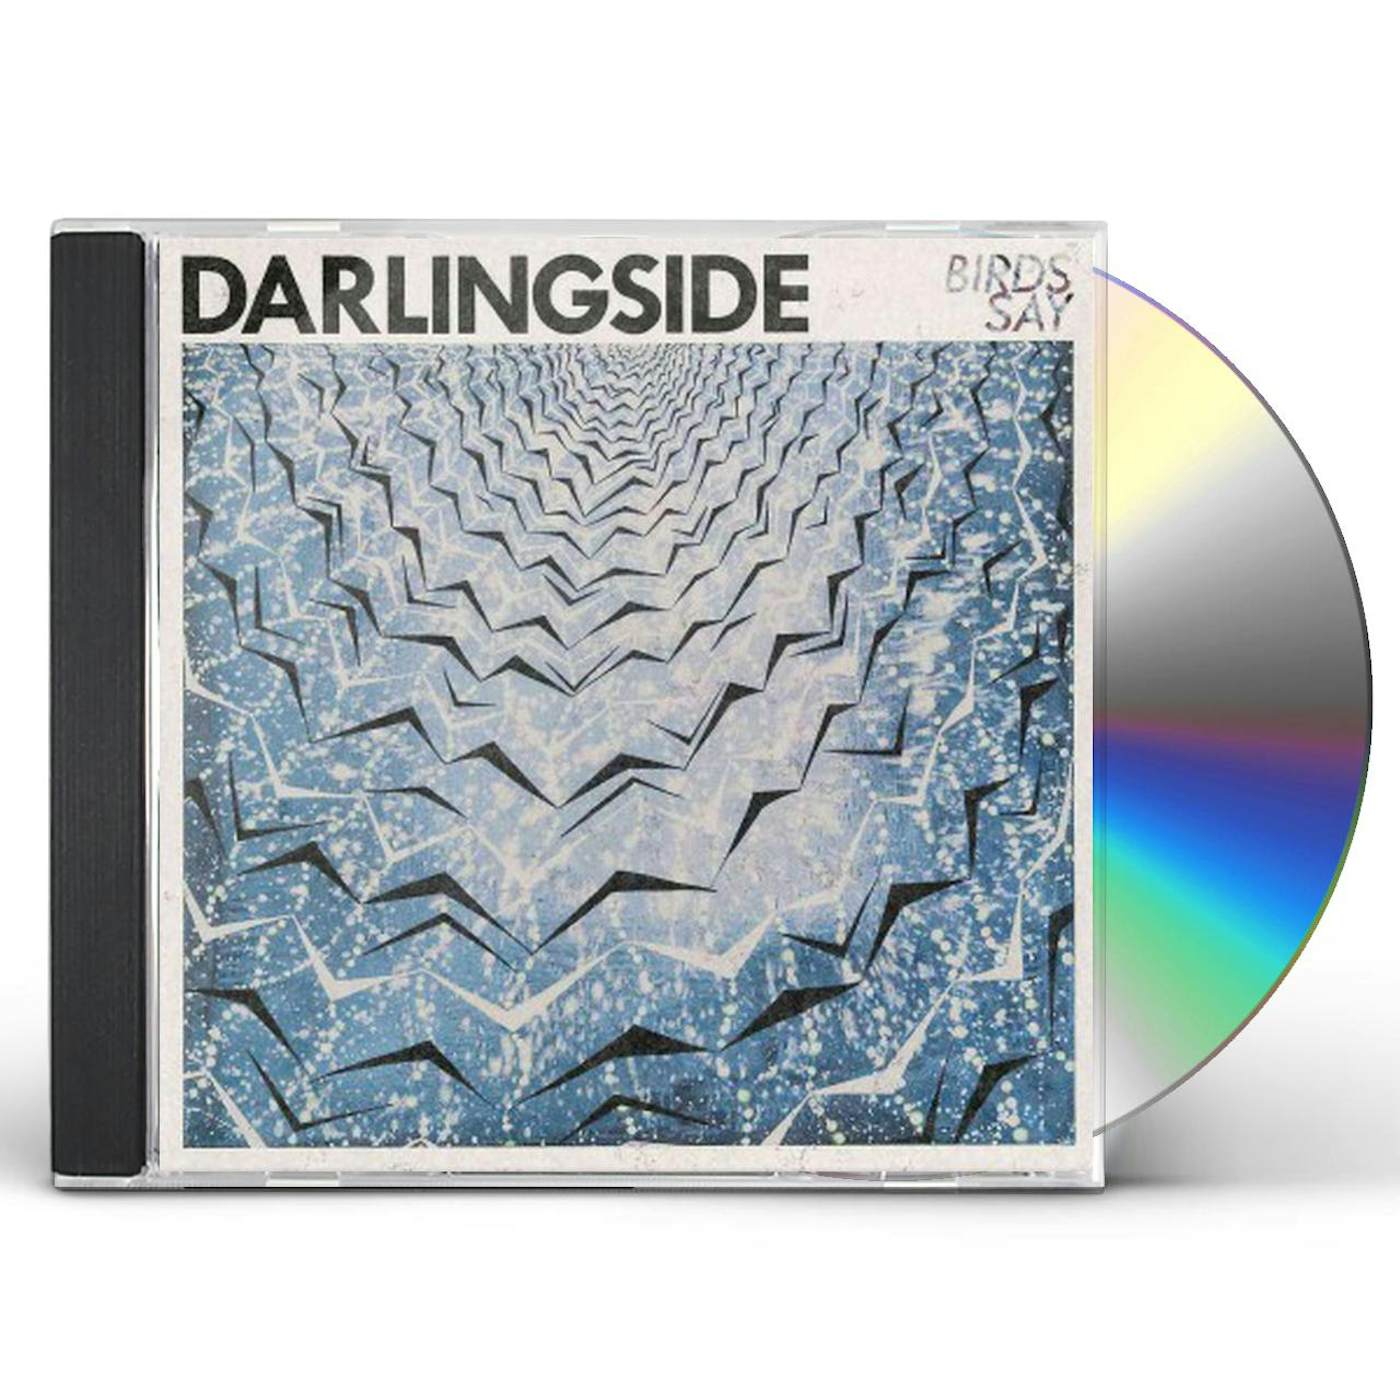 Darlingside BIRDS SAY CD